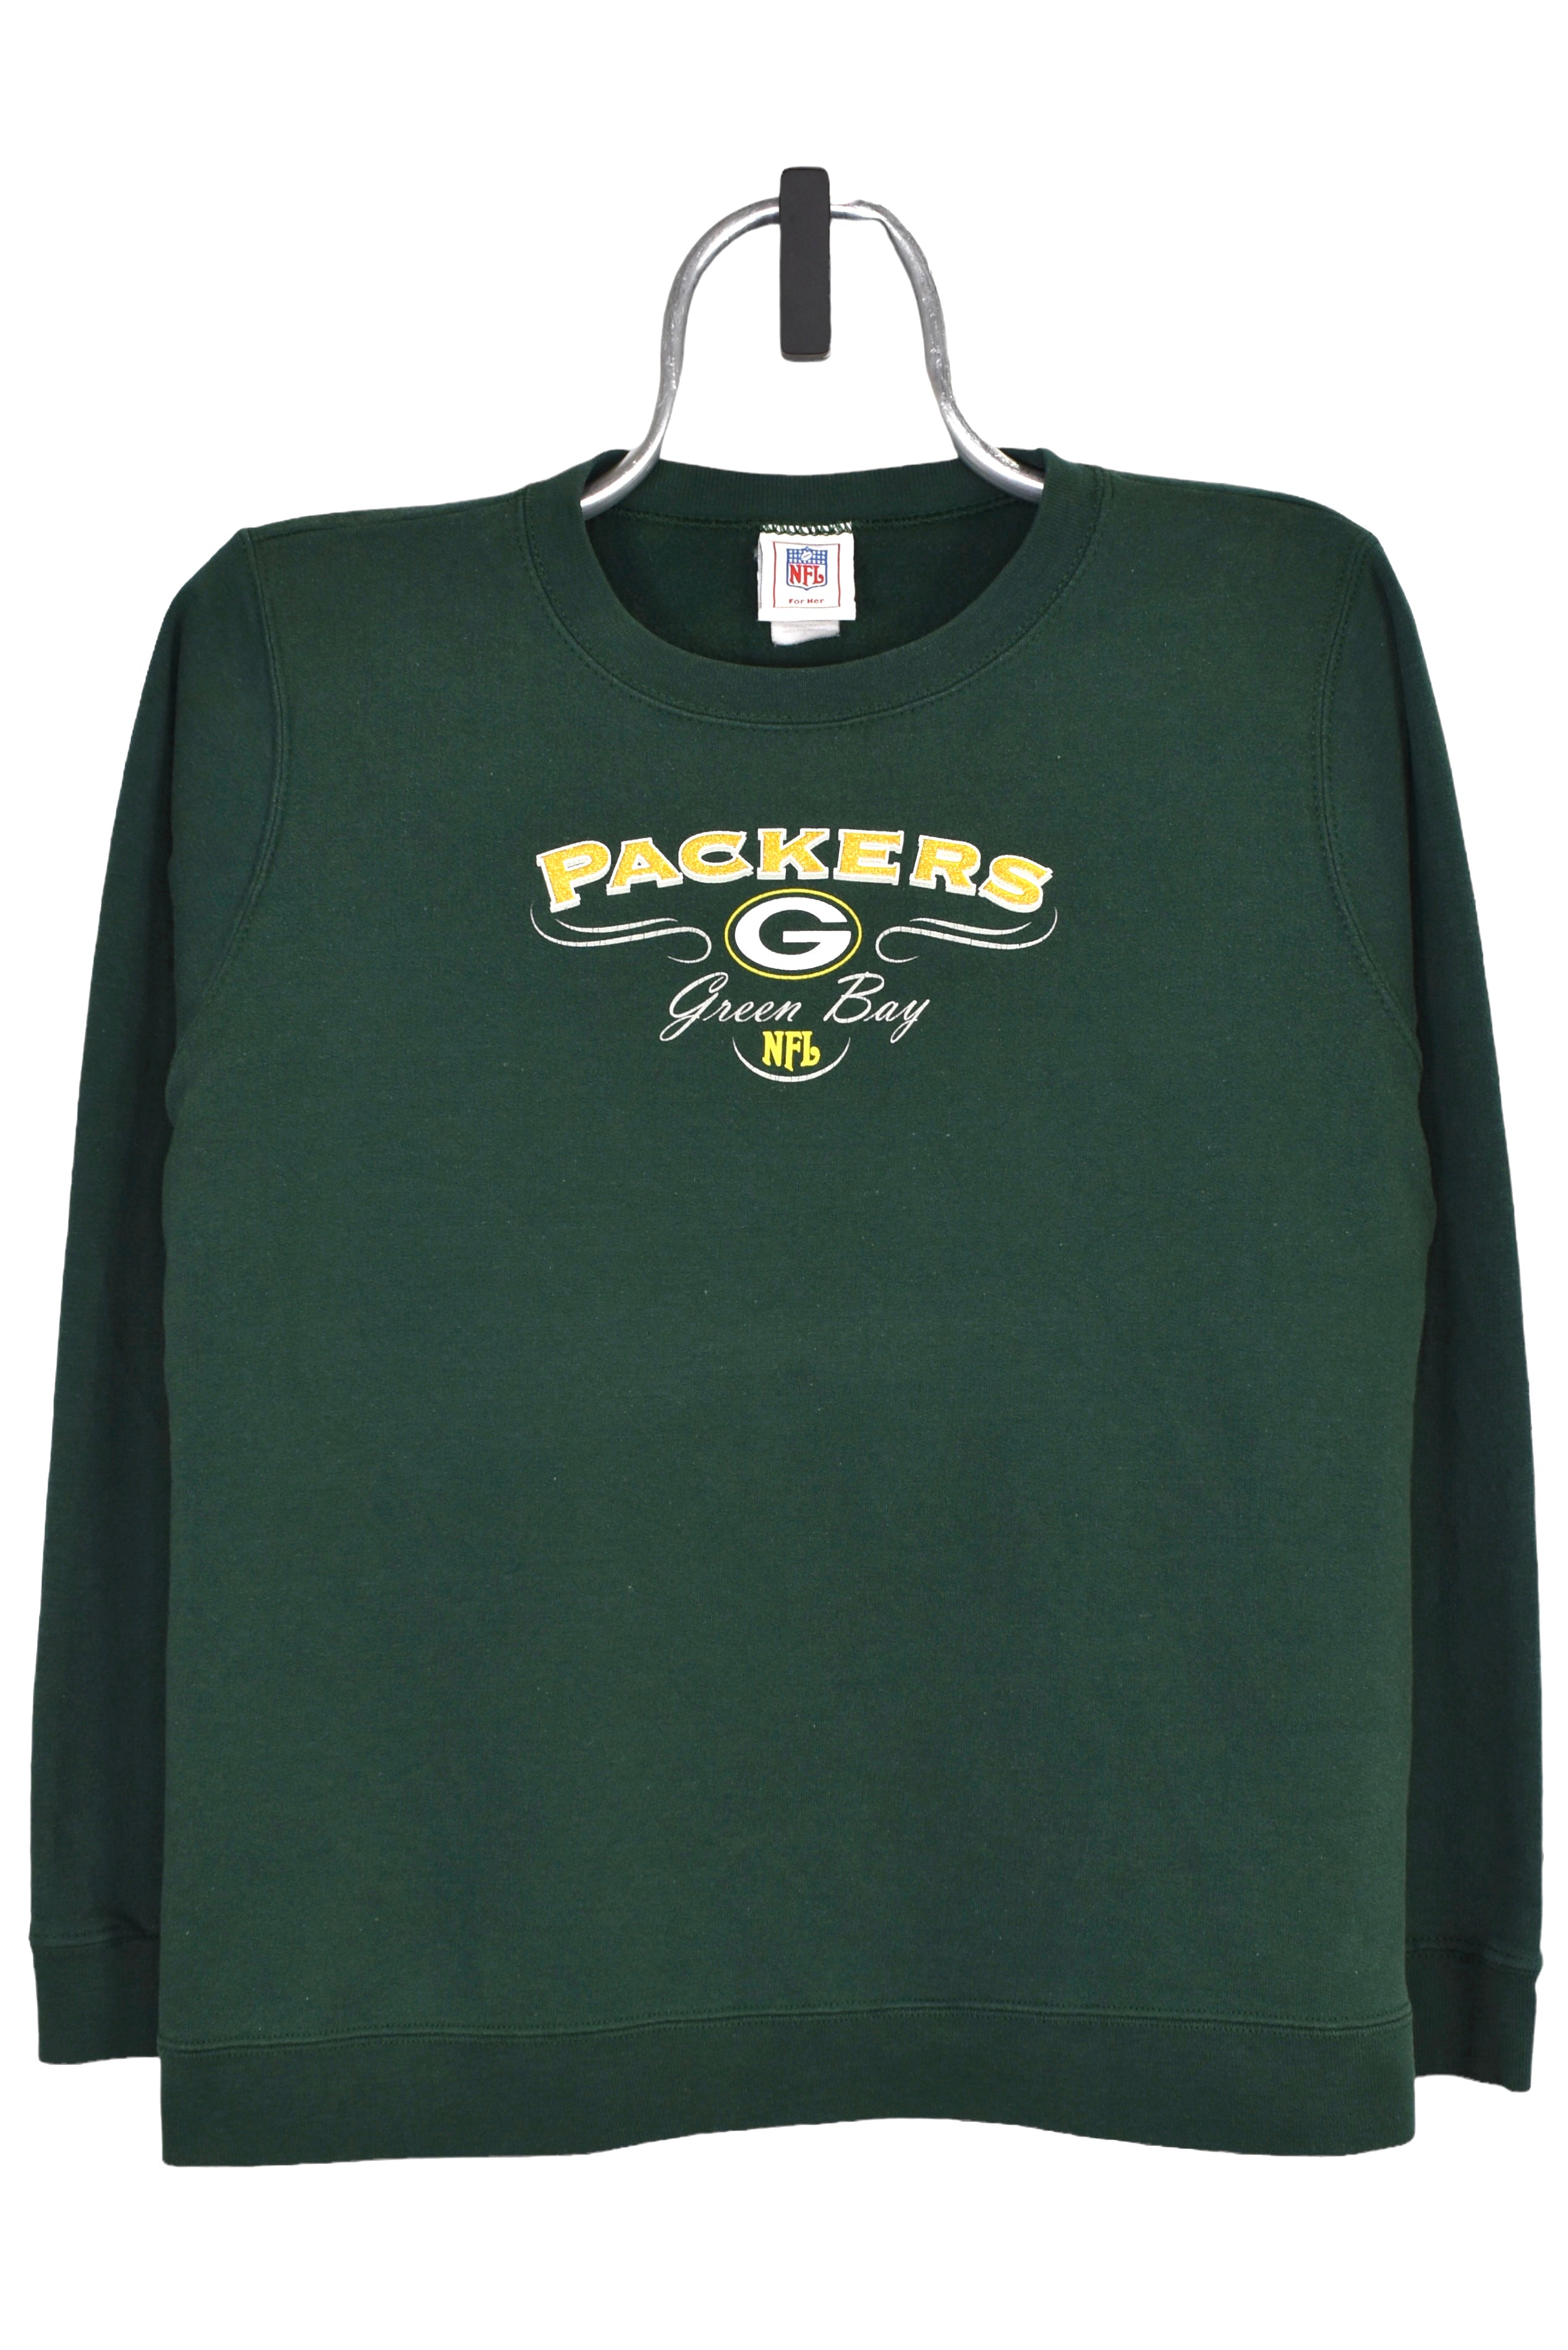 Womens vintage Green Bay Packers sweatshirt (M), green NFL crewneck